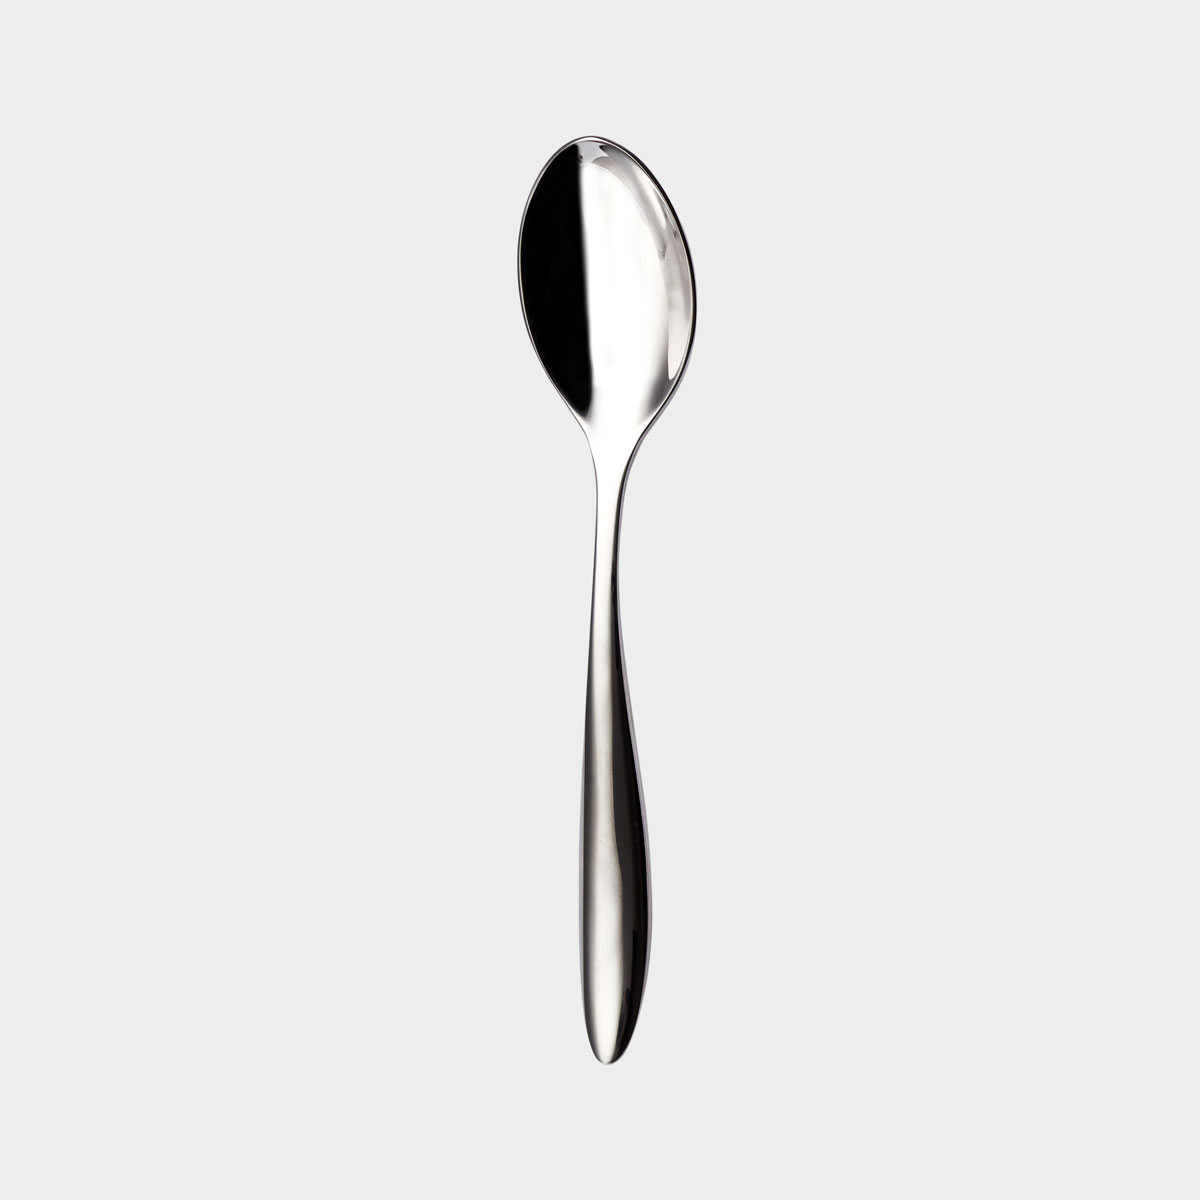 Lykke tea spoon product image